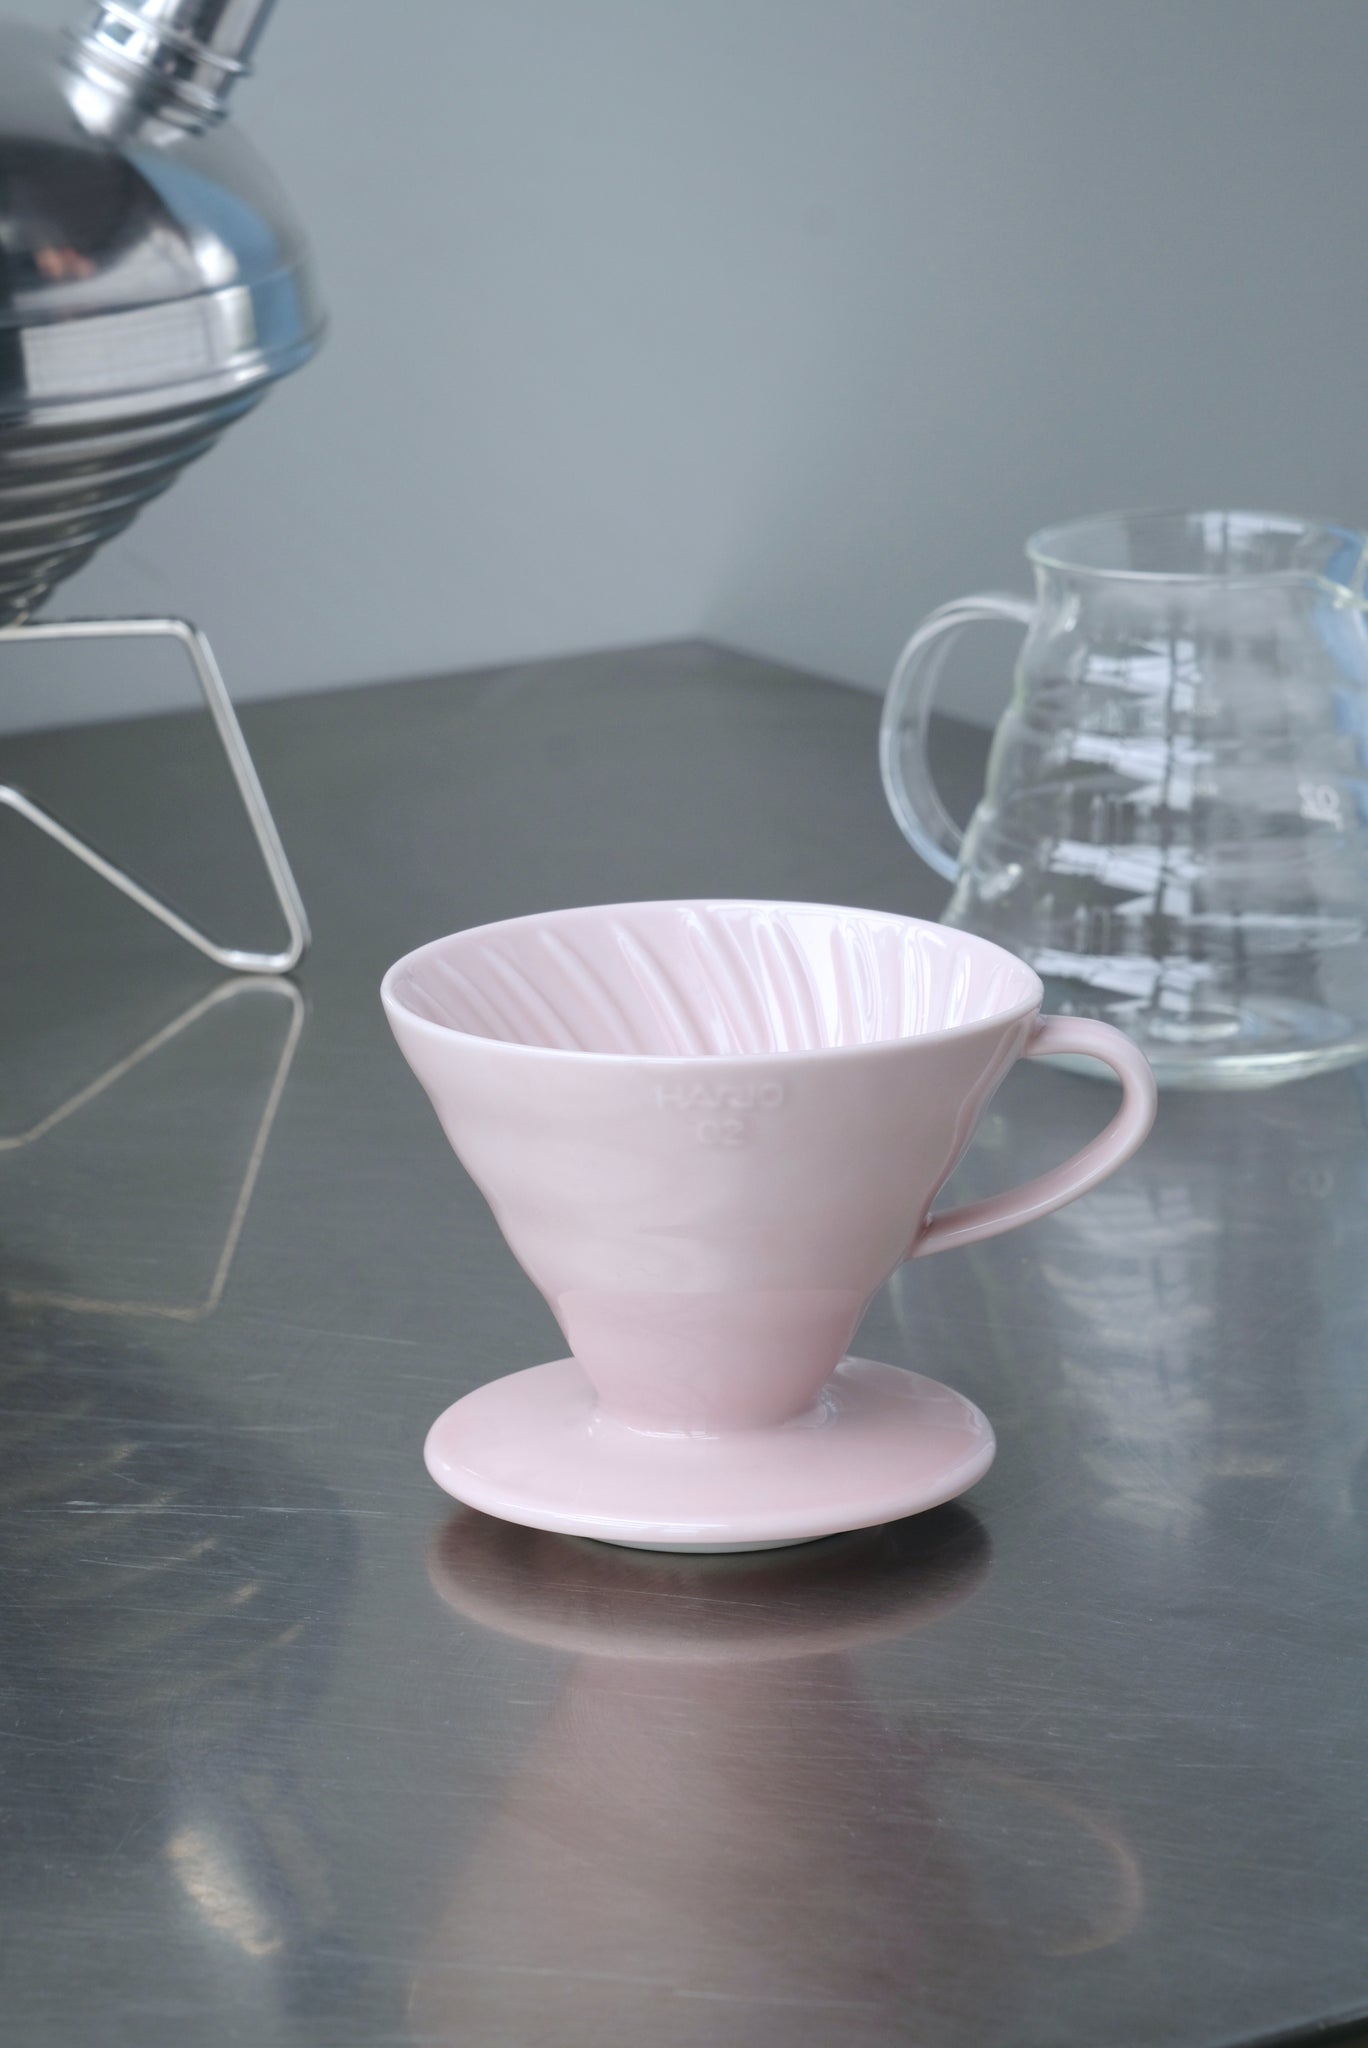 V60 ceramic dripper 02 pink-Hario-[interior]-[design]-KIOSK48TH